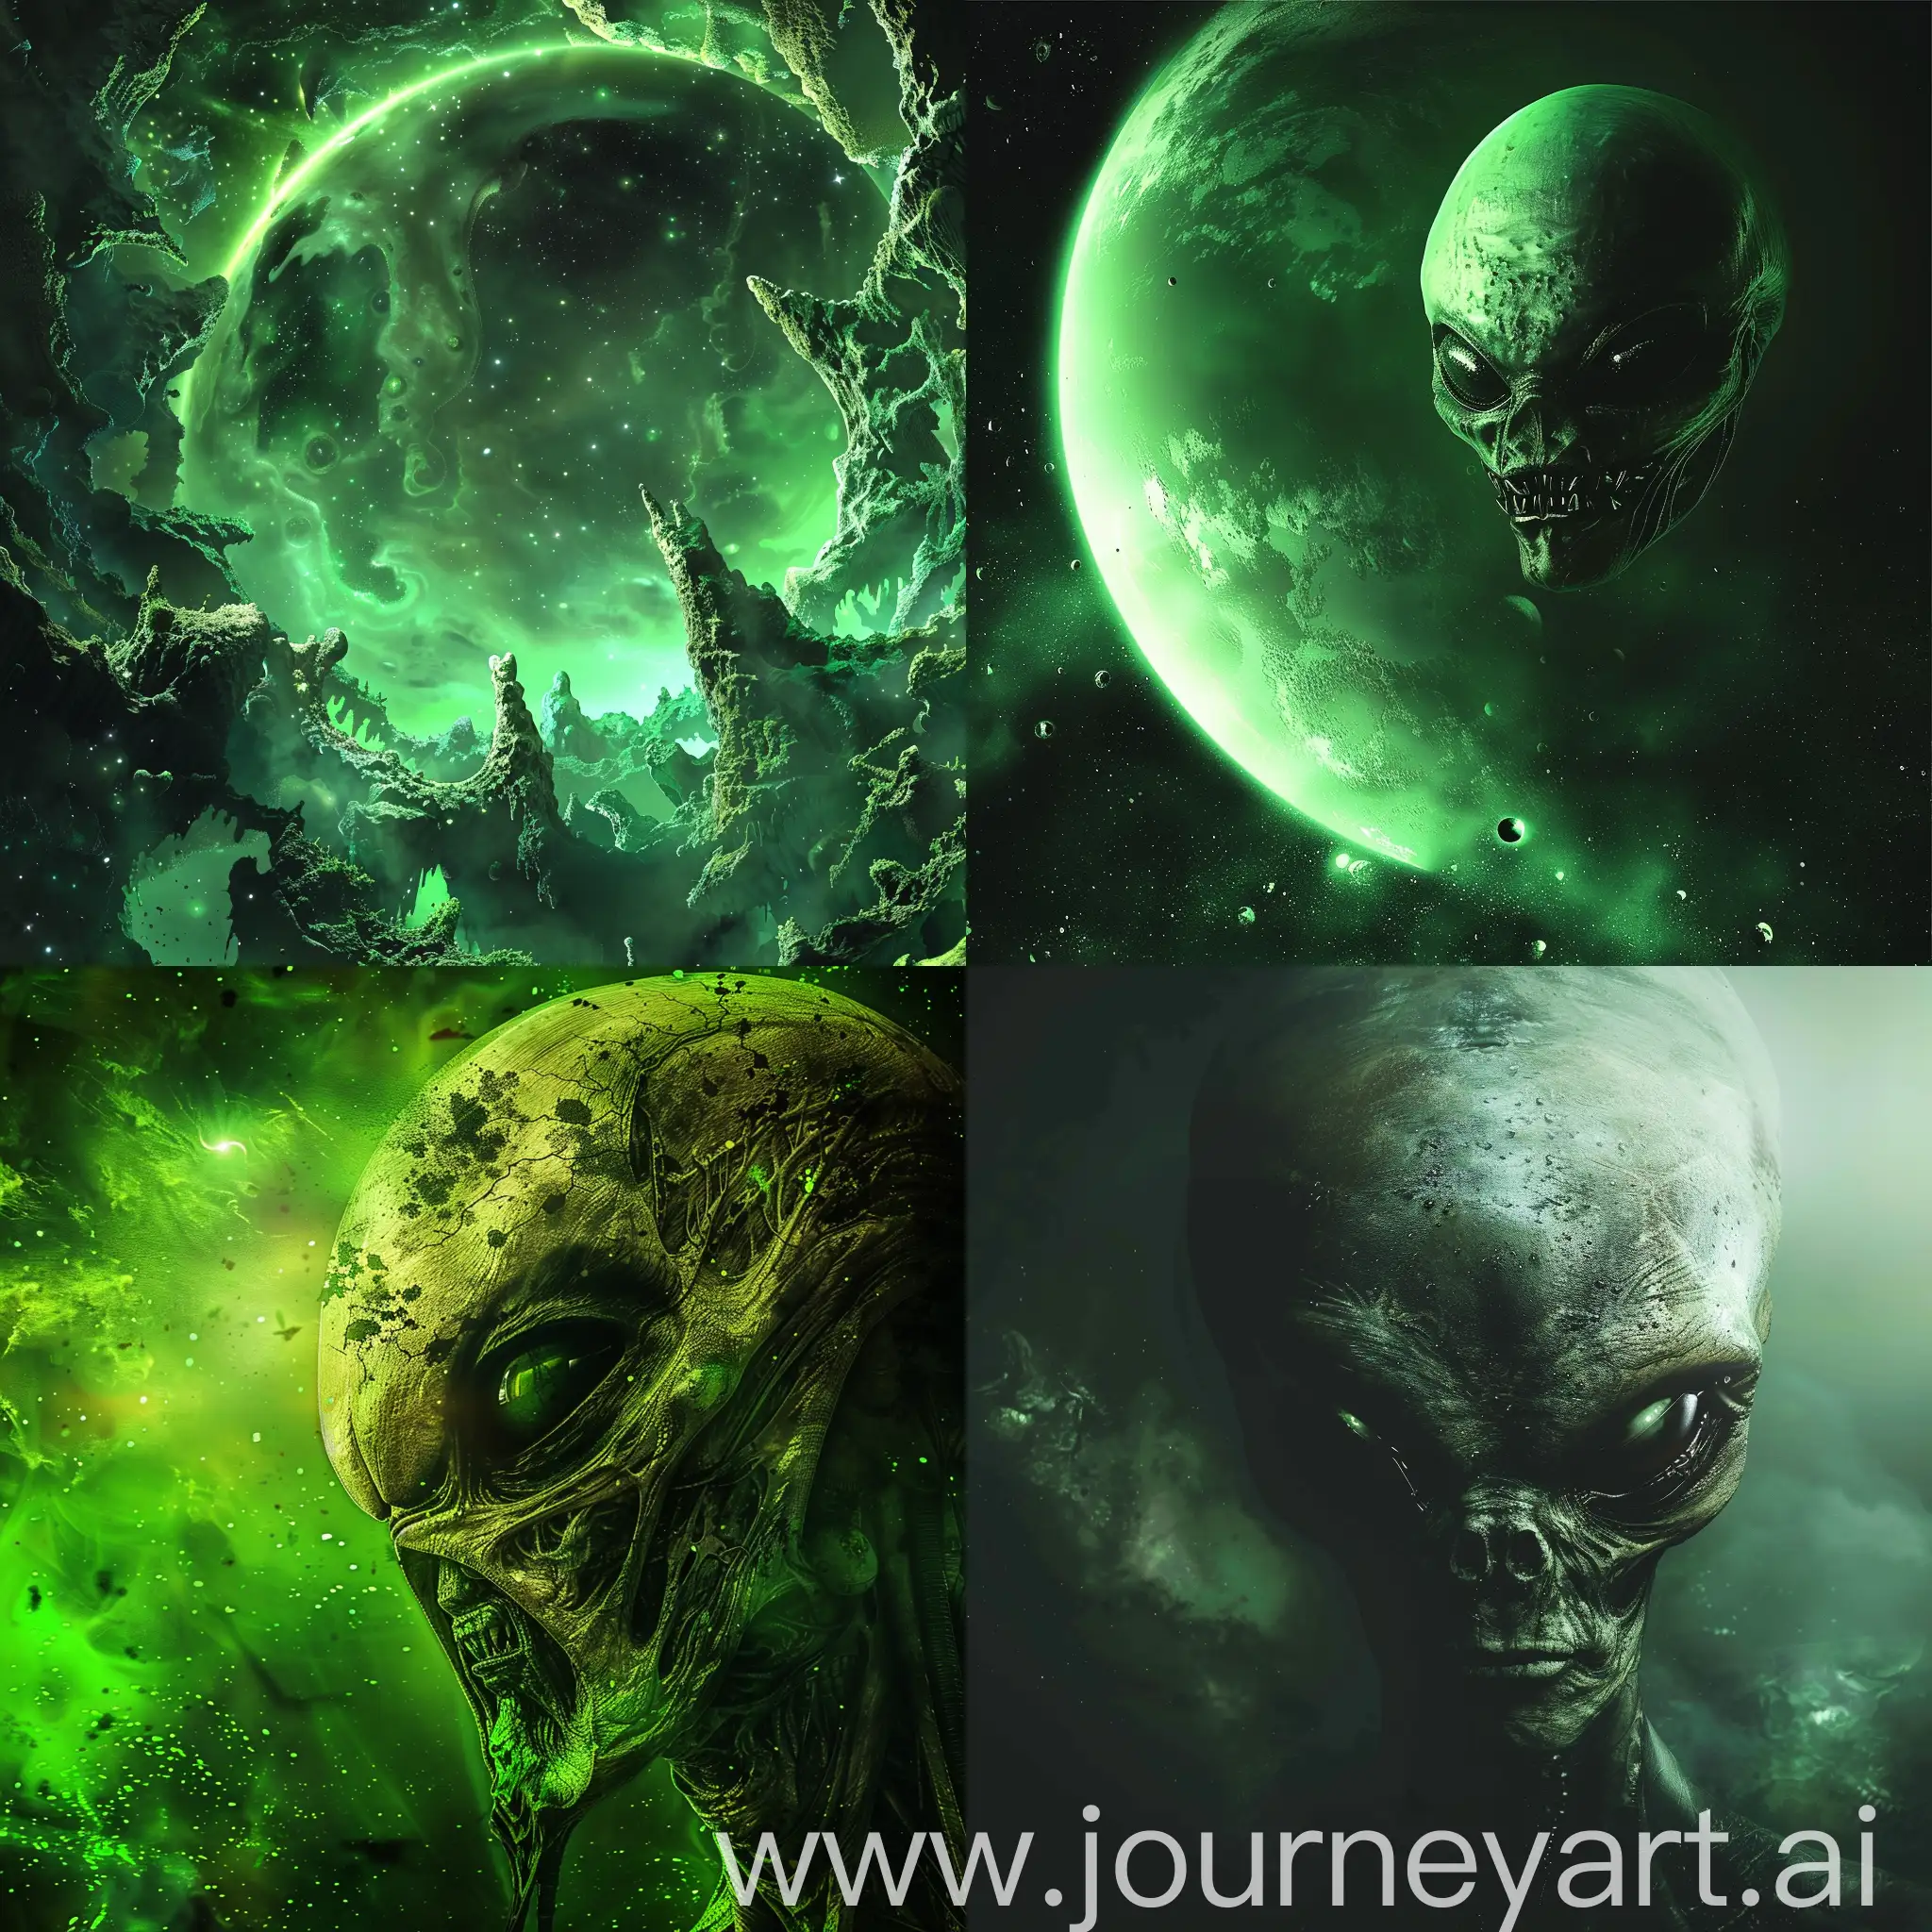 Eerie-Alien-World-Green-Atmosphere-and-Serene-Space